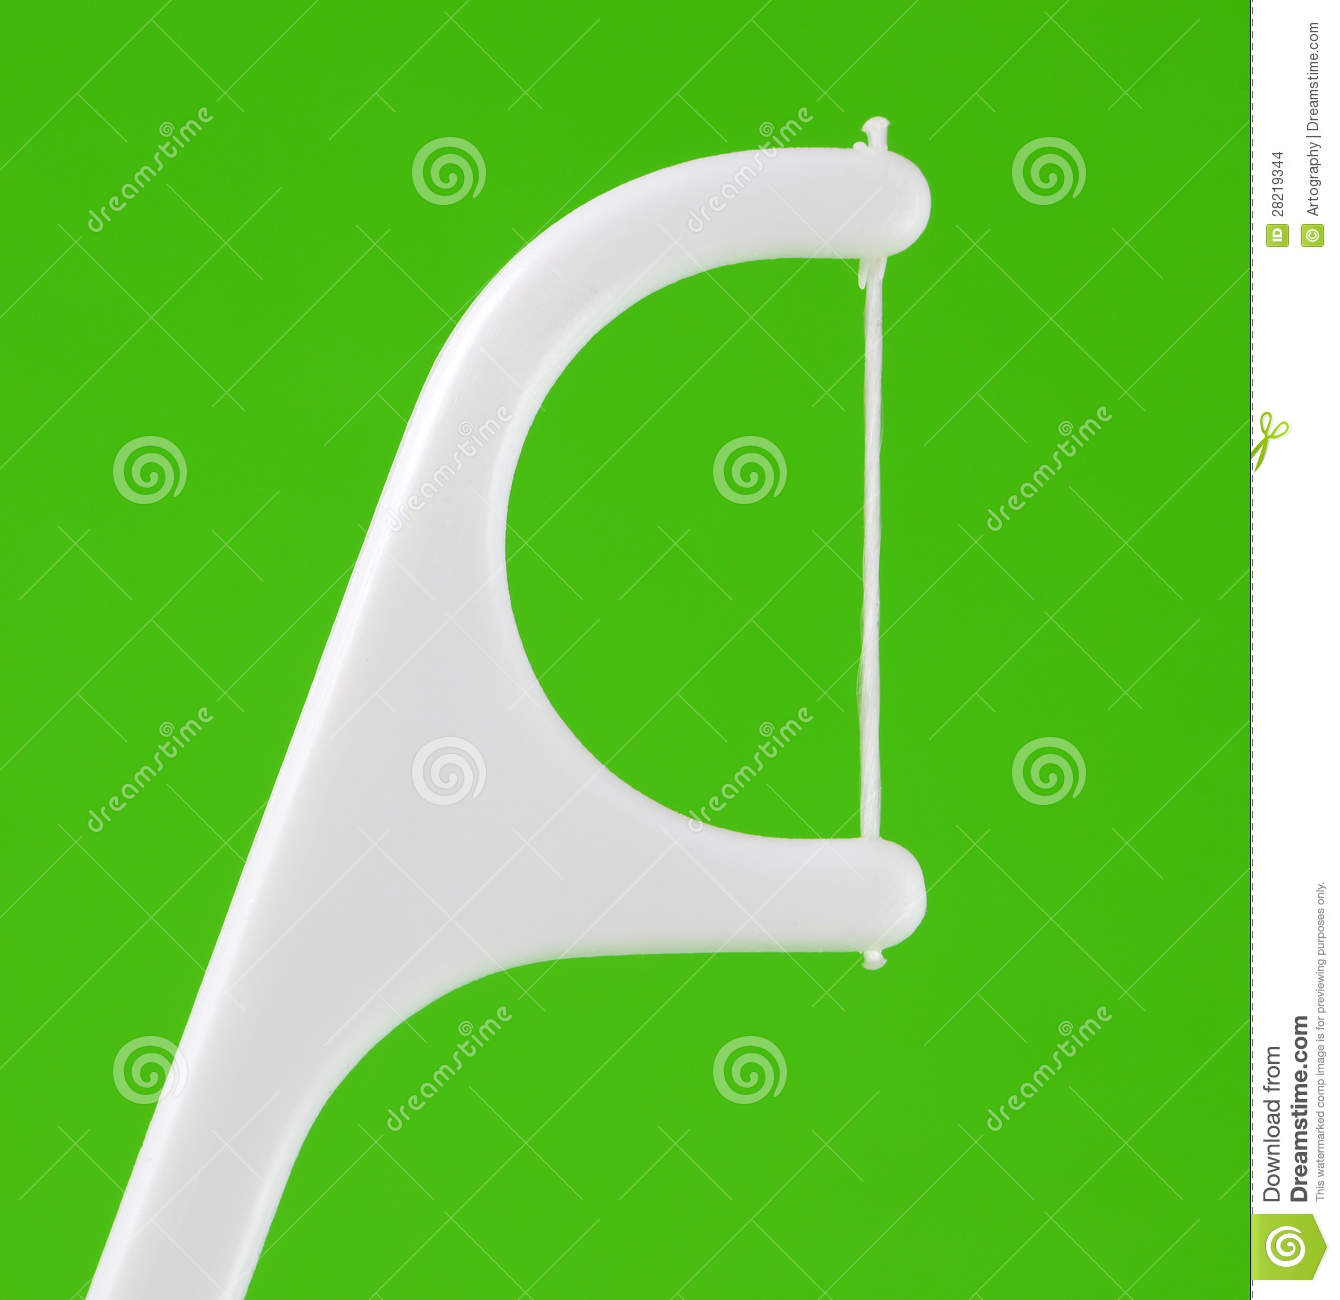 Dental Floss Stick Stock Images   Image  28219344